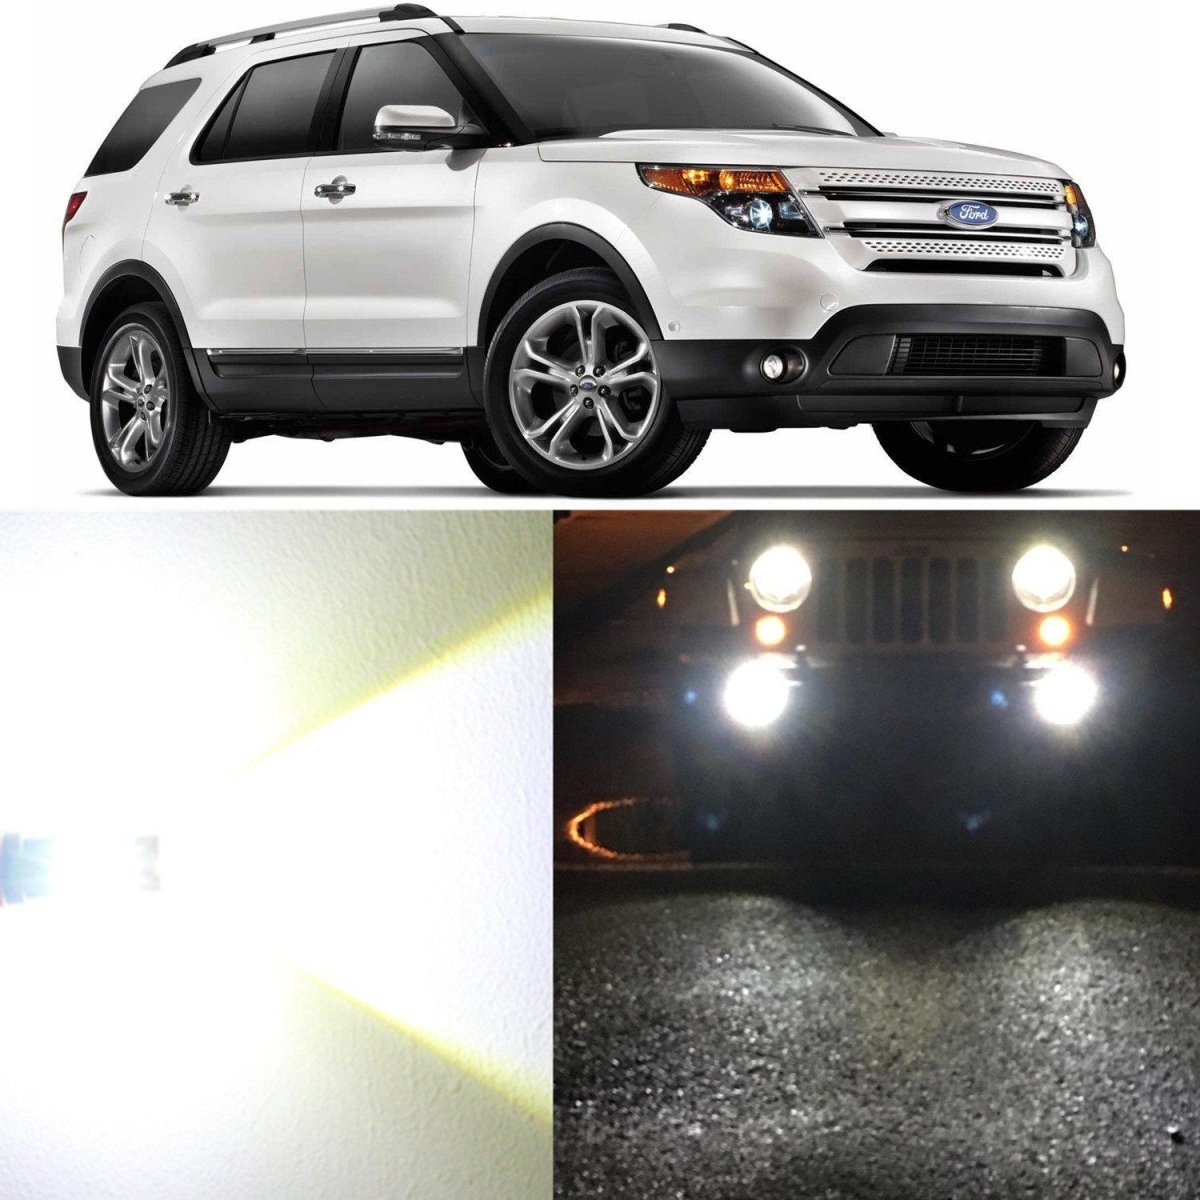 2011-2015 Ford Explorer LED Fog Lights Bulbs Replacement Upgrade -Alla Lighting